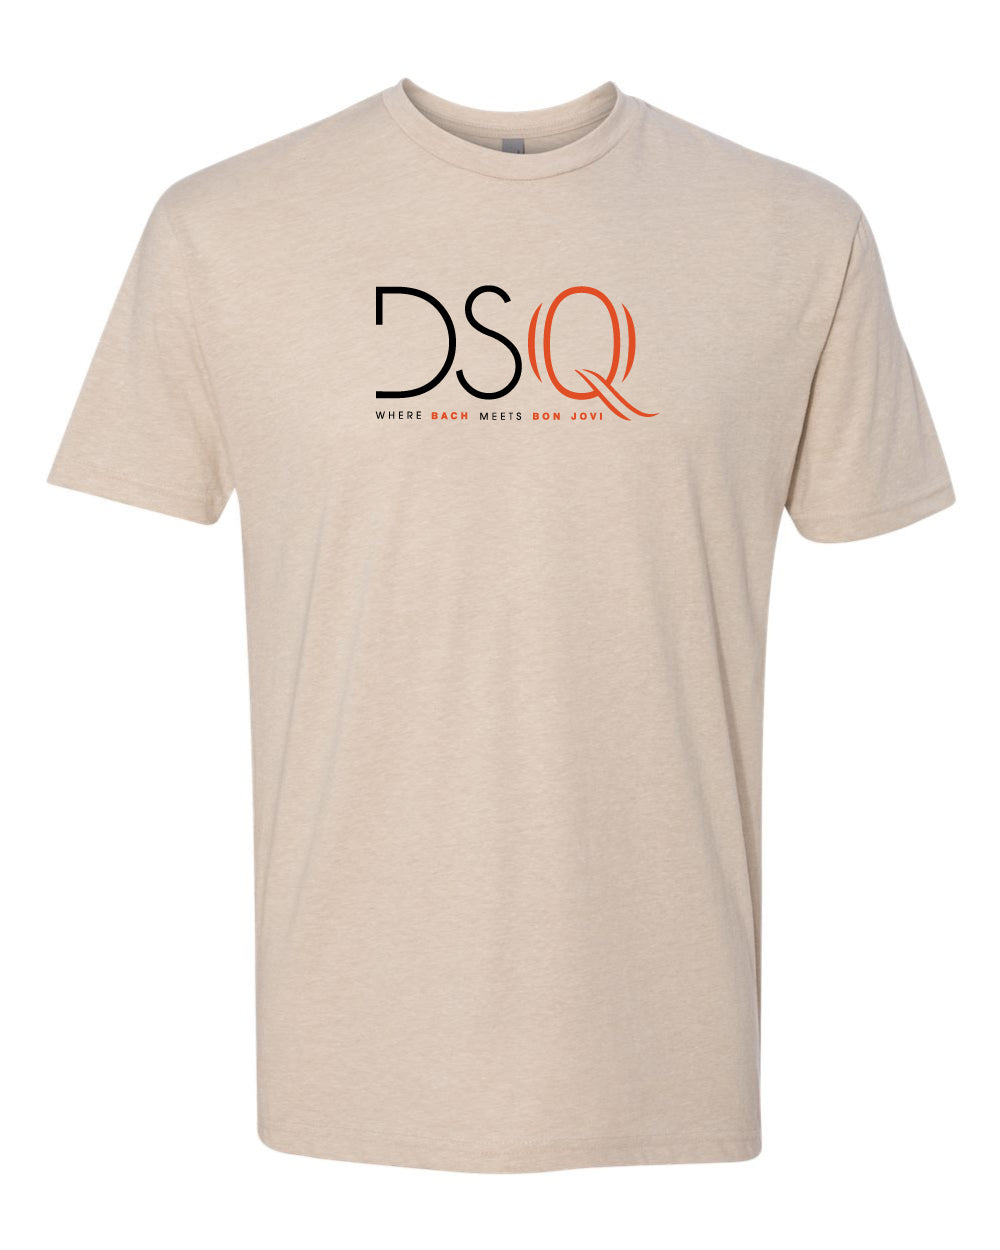 DSQ Cream Colored T-Shirt